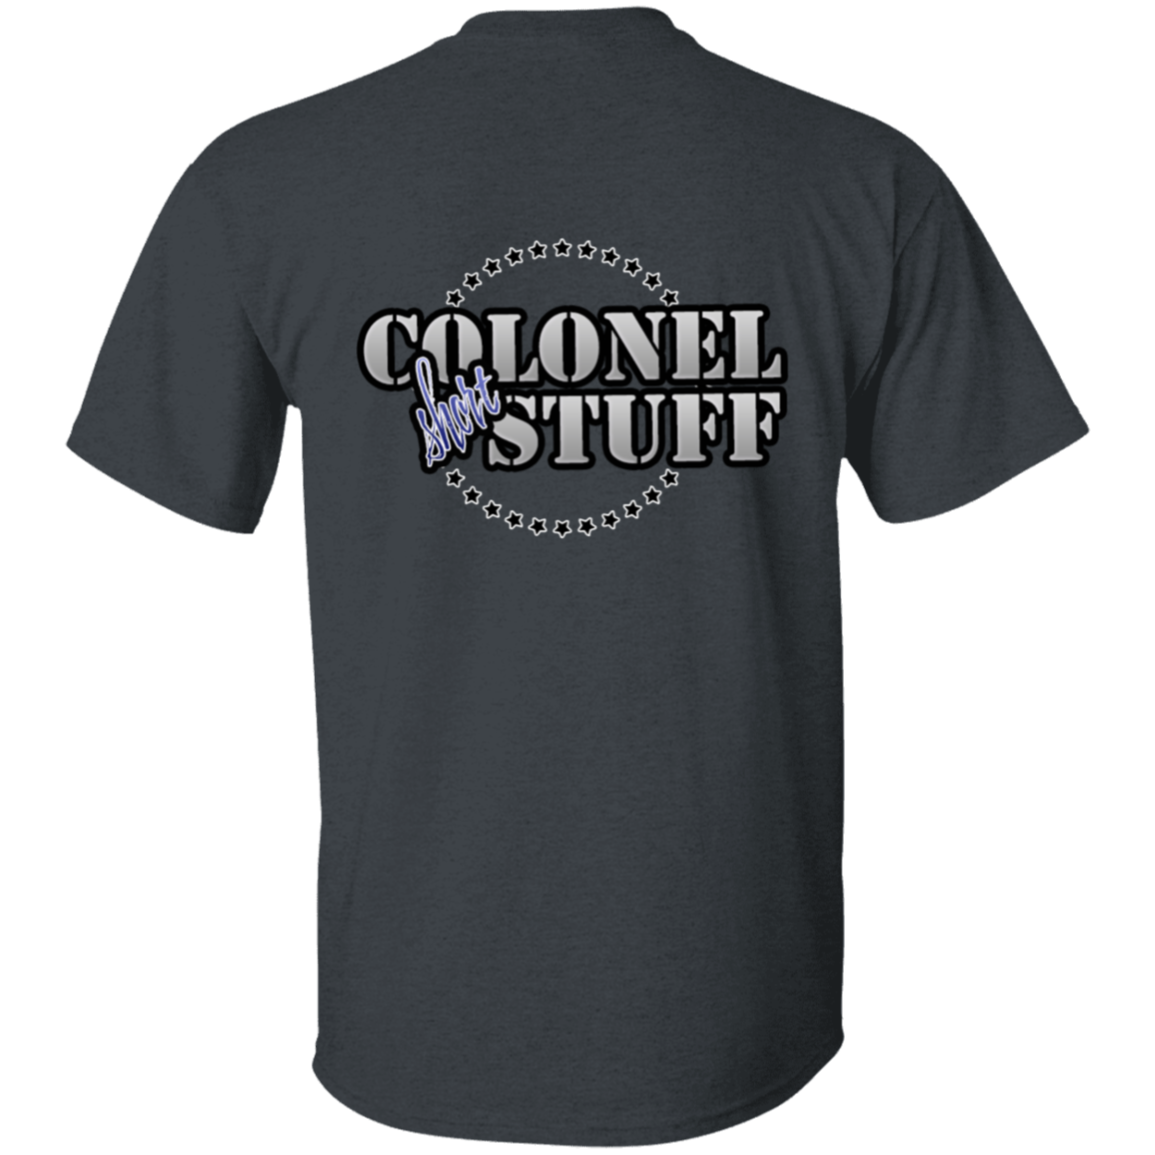 Colonel Short Stuff Logo Shirt